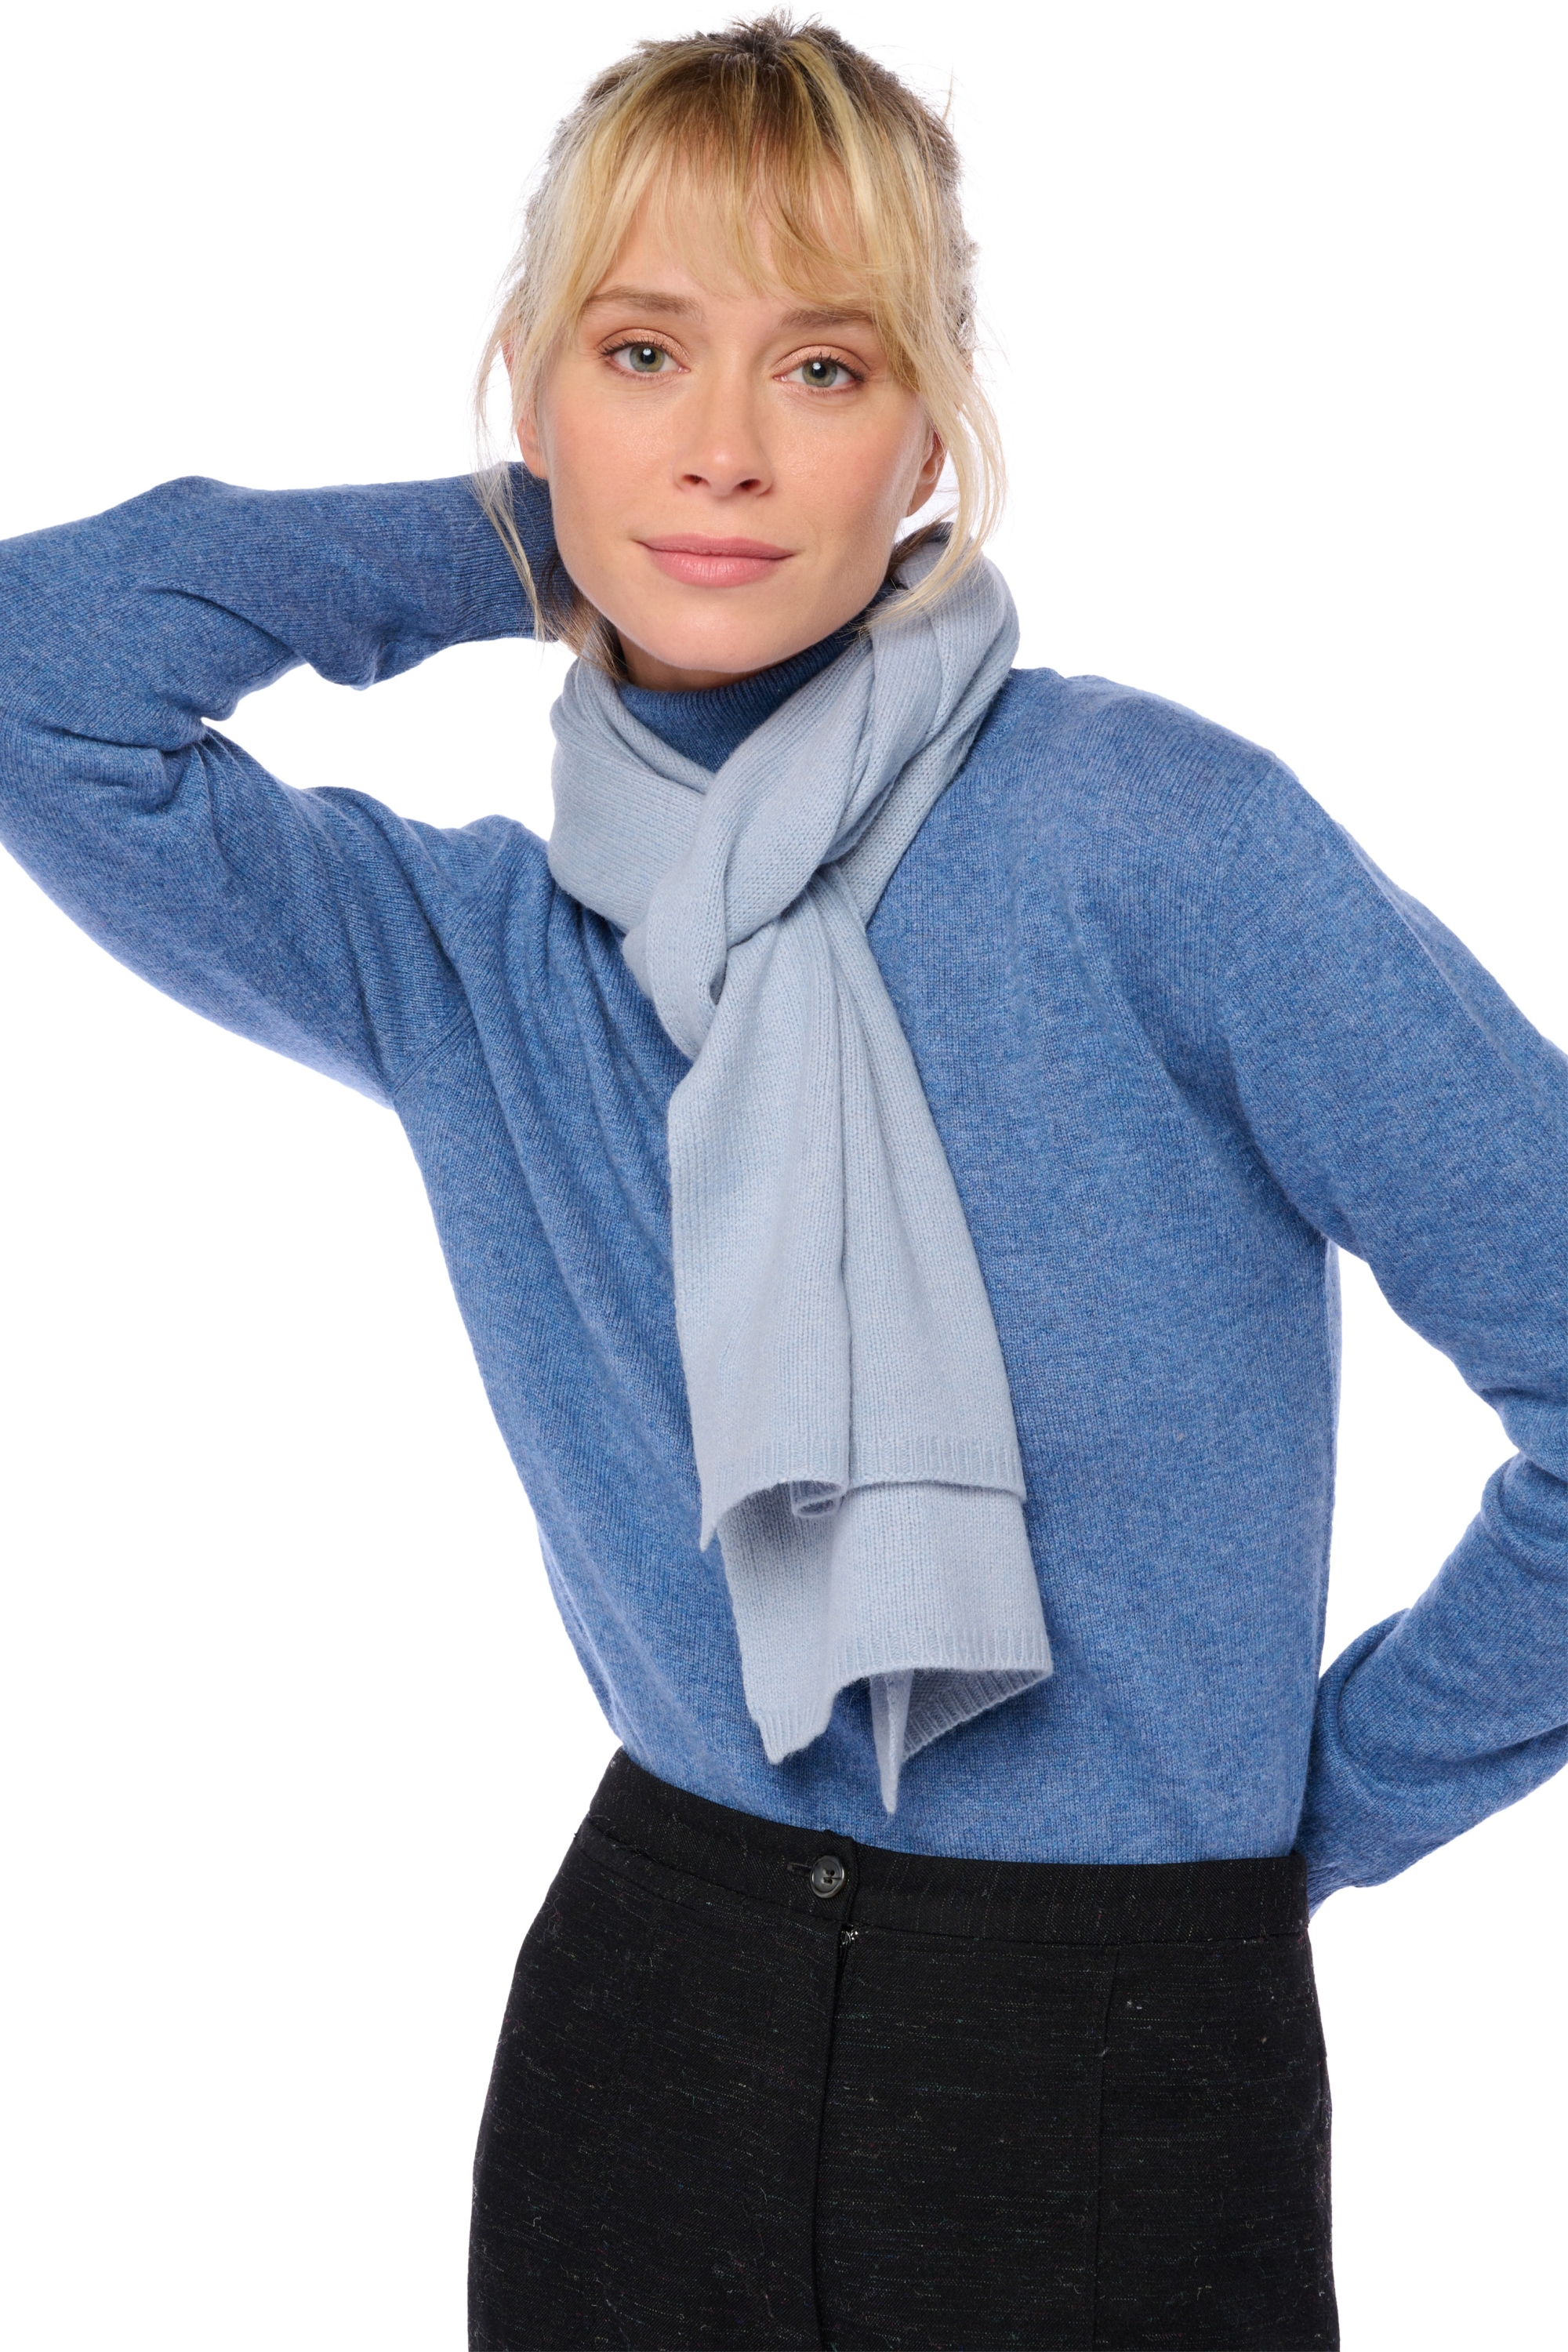 Yak accessories scarves mufflers yakozone sky blue 160 x 30 cm